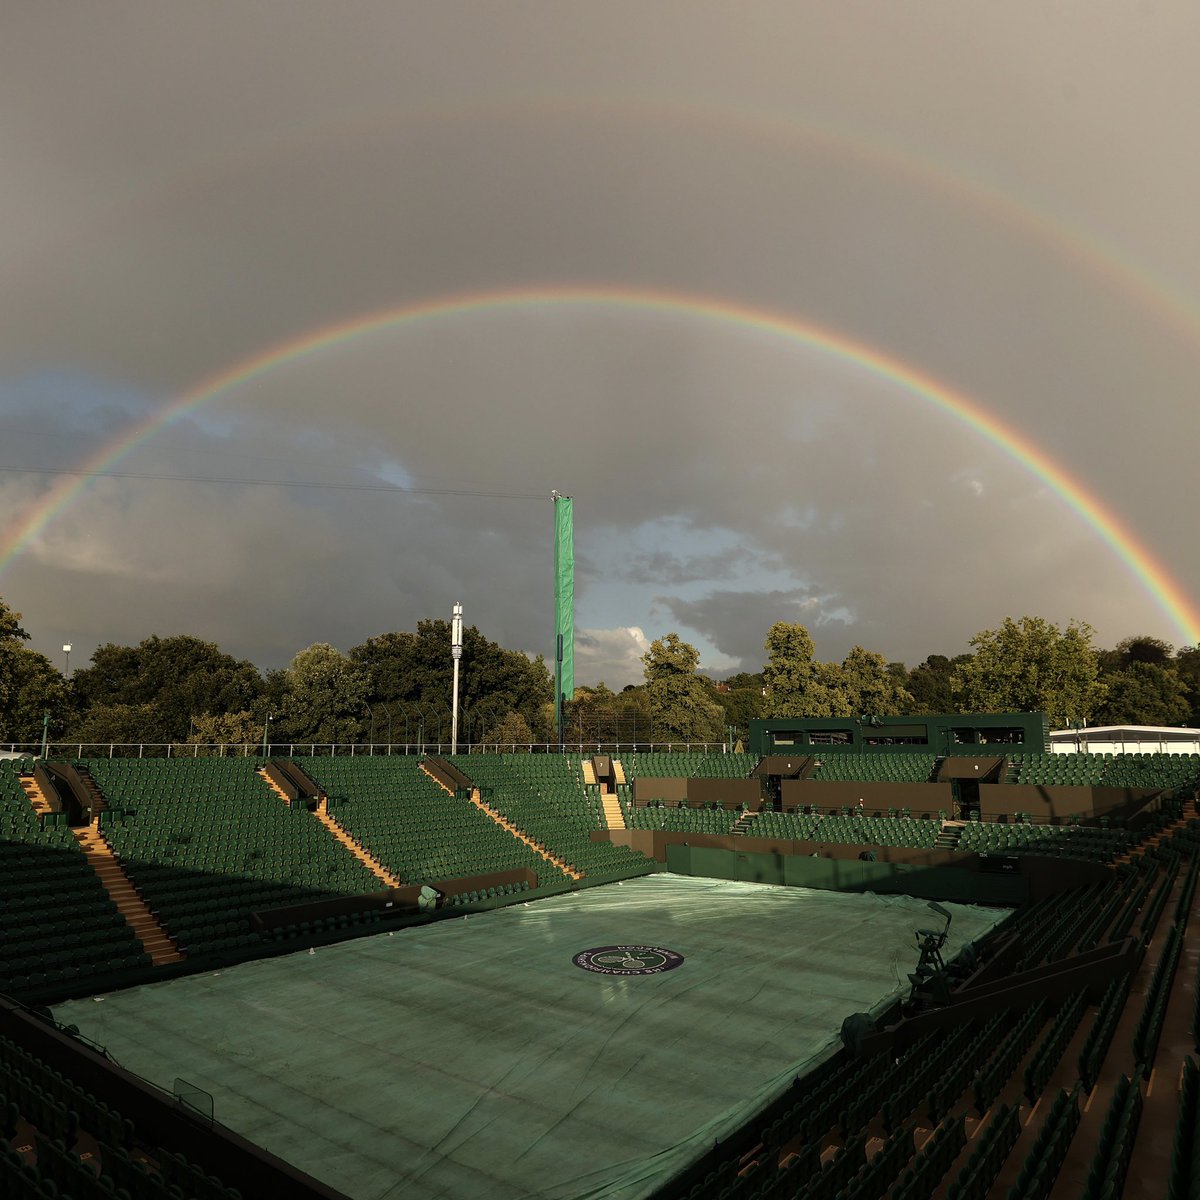 @atptour's photo on #Wimbledon